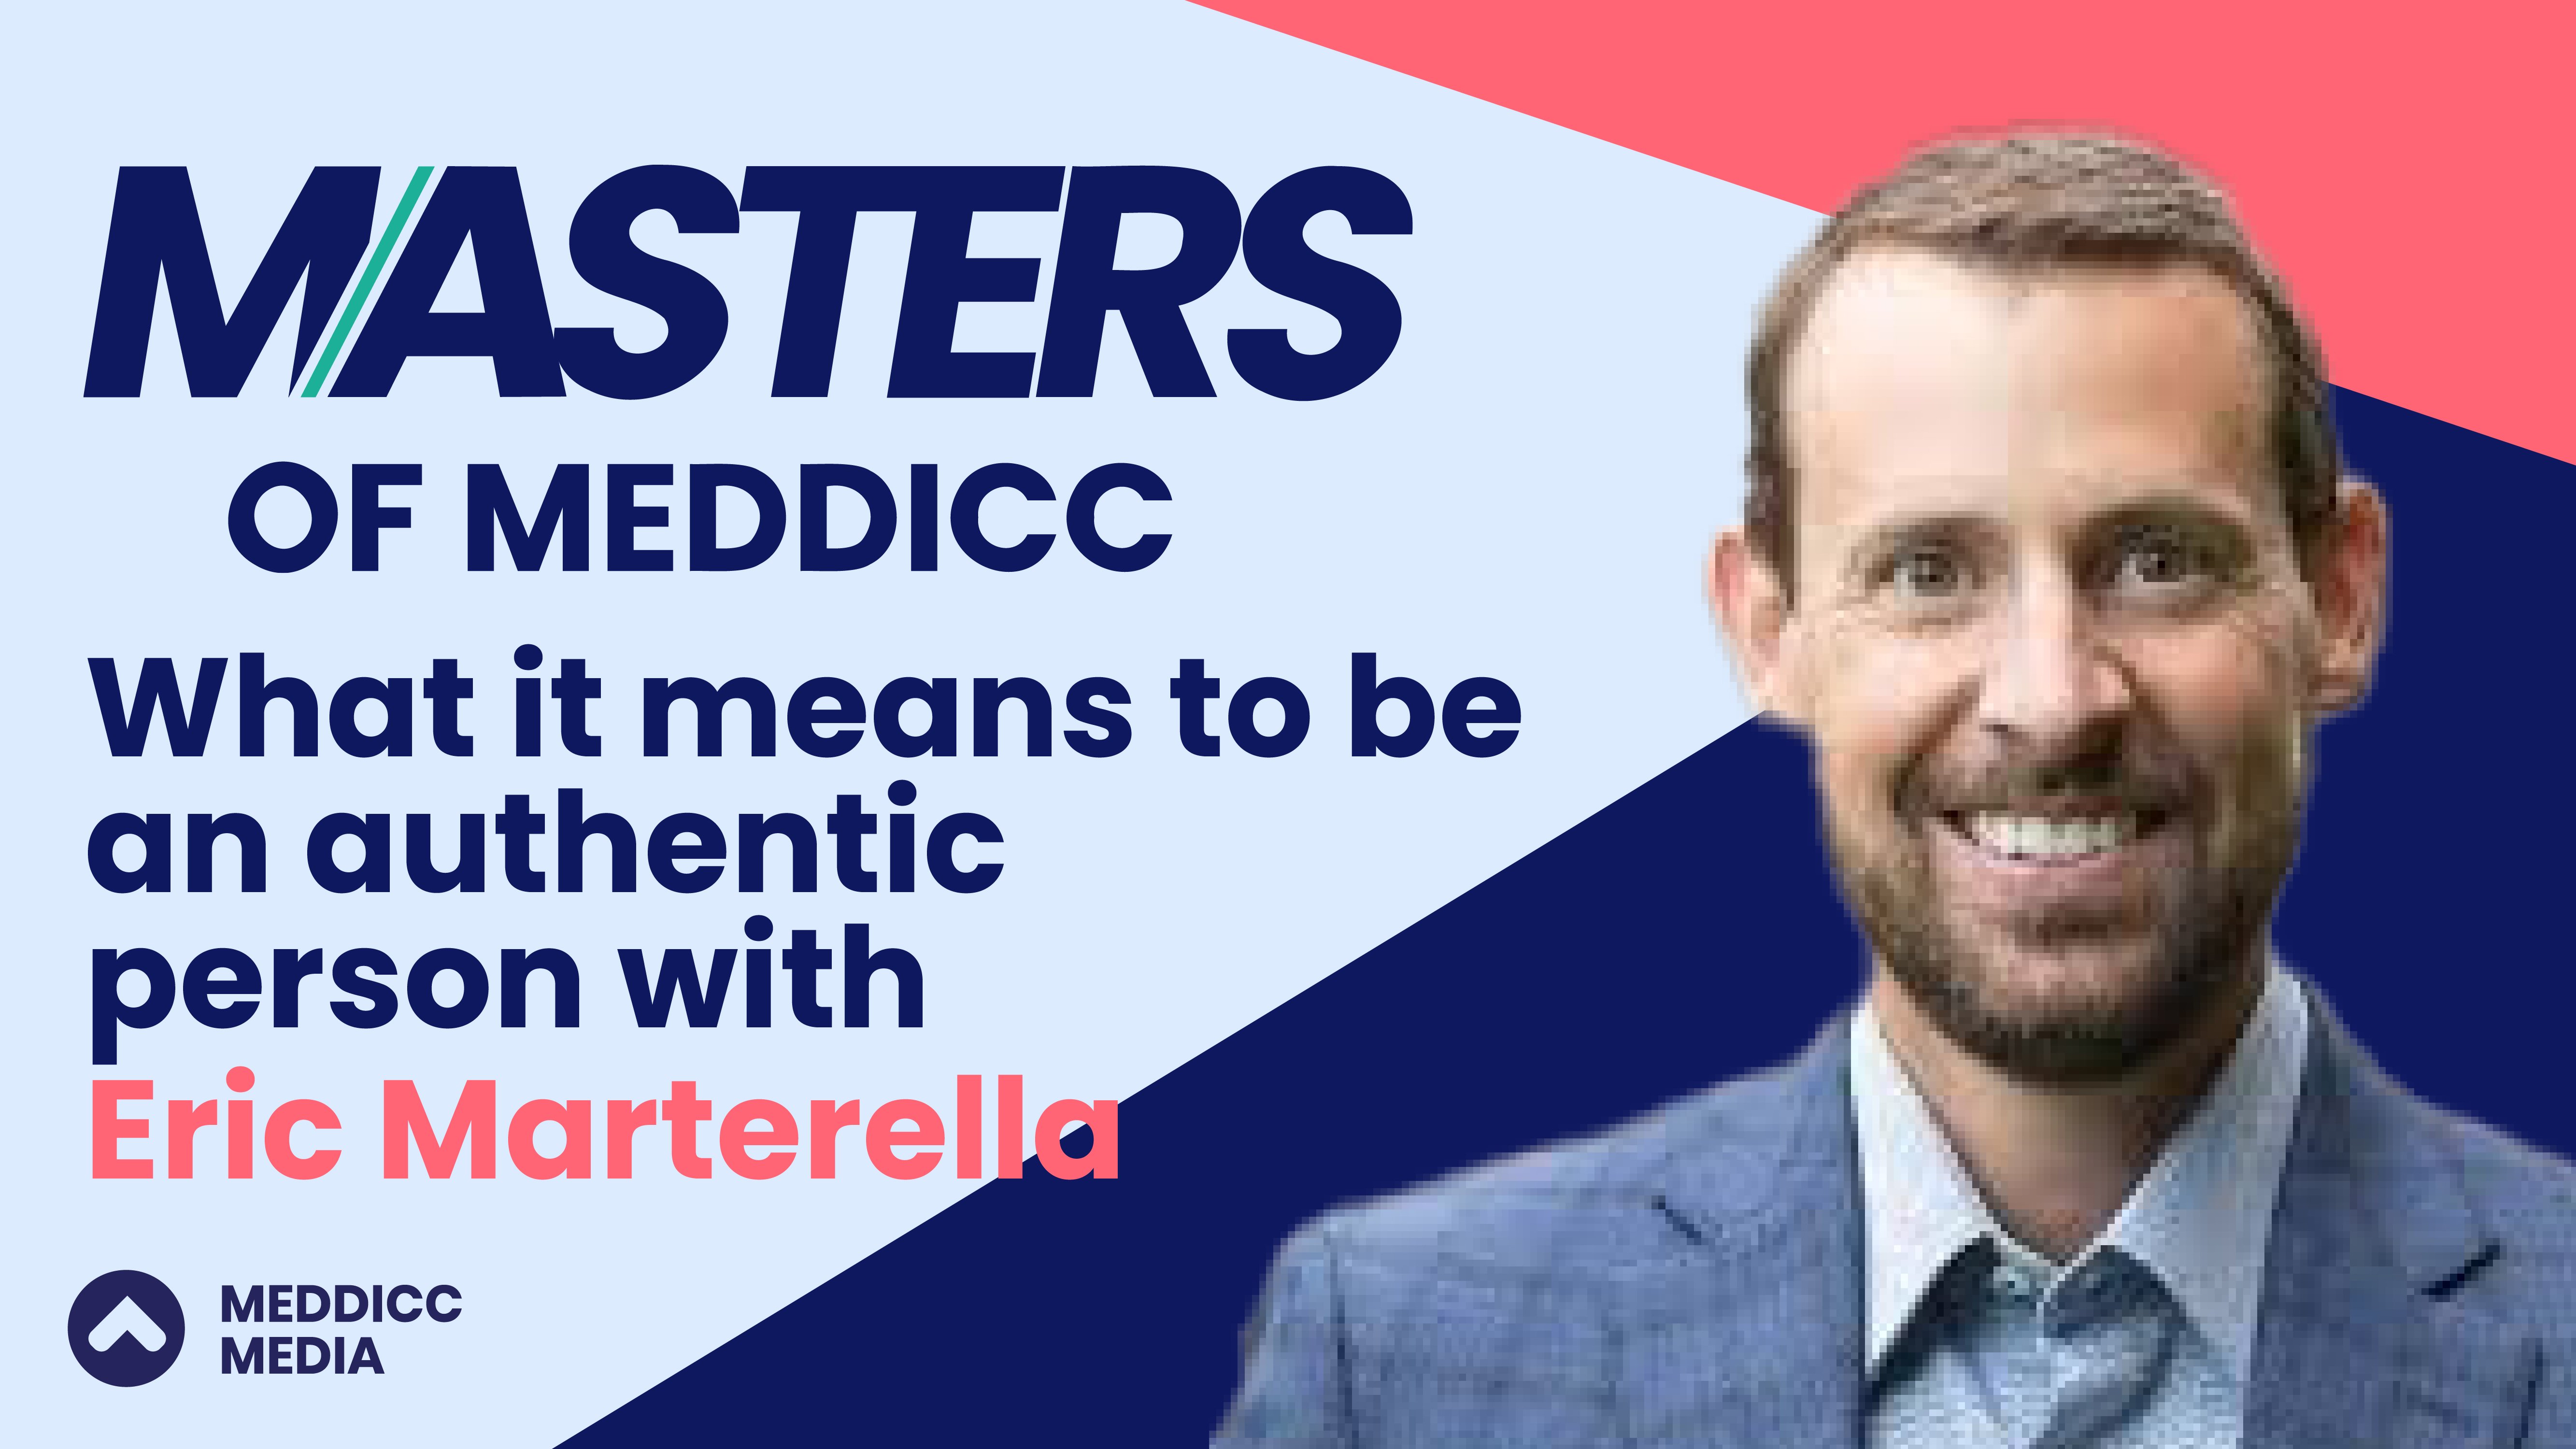 Masters of MEDDICC: Eric Marterella